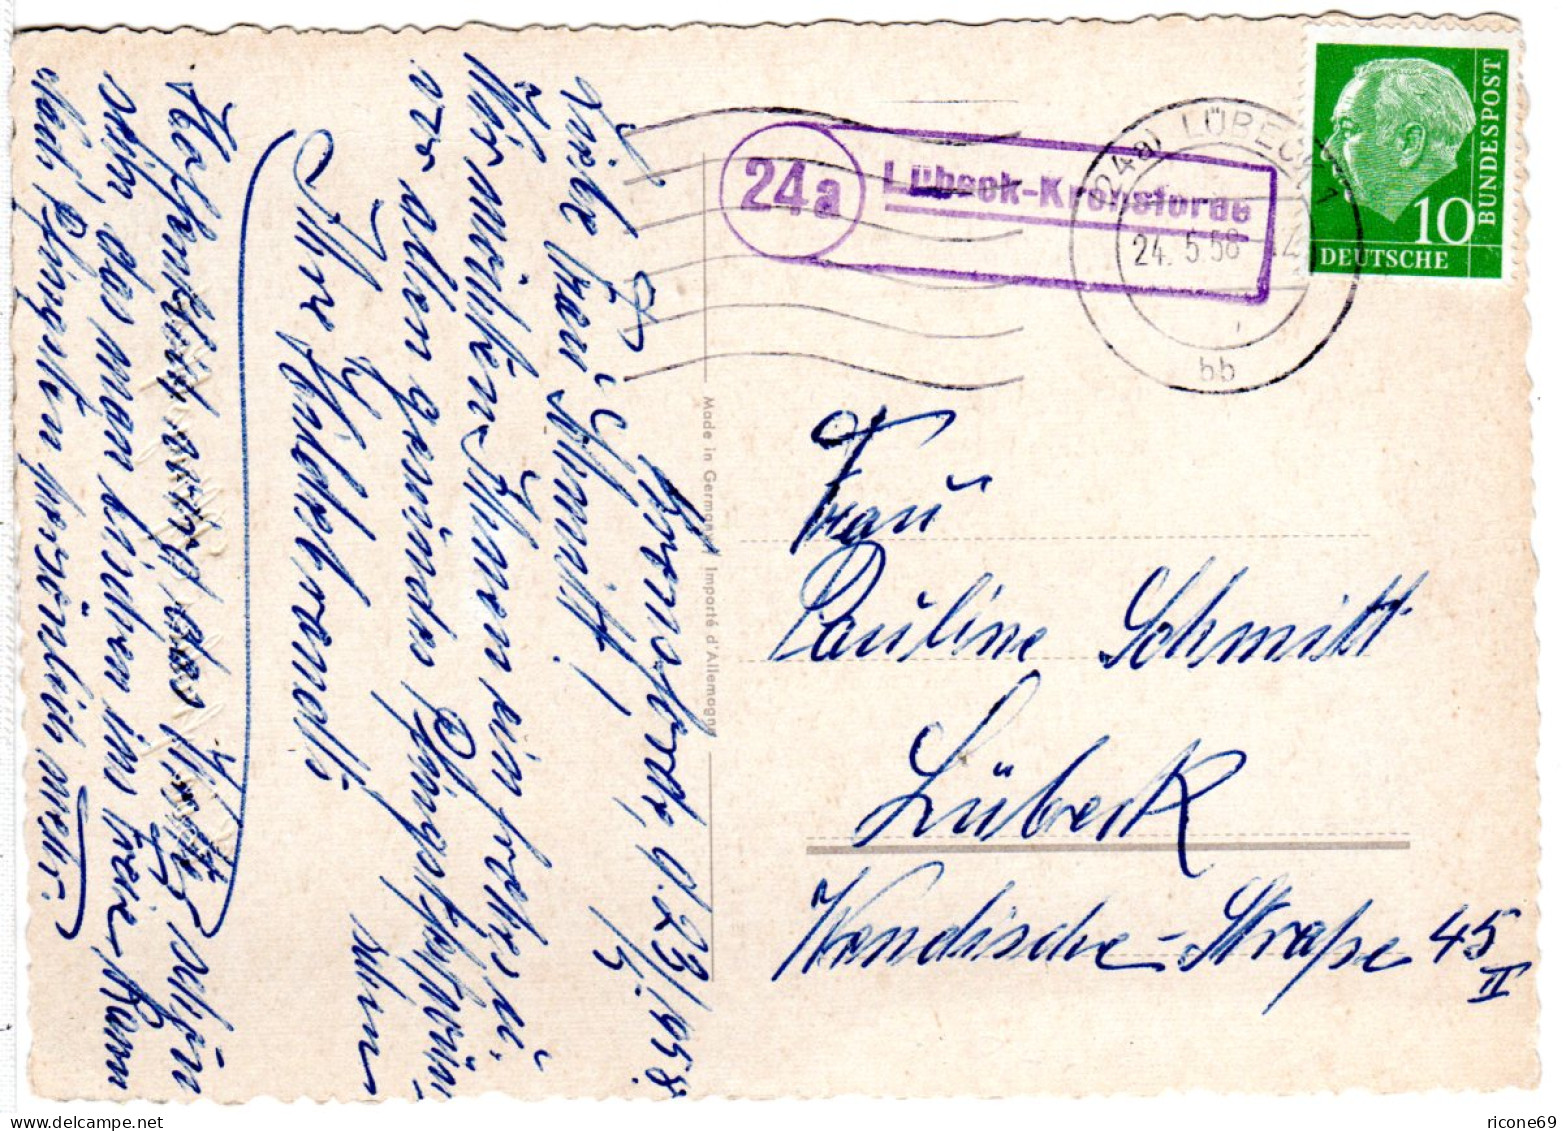 BRD 1958, Landpost Stpl. 24a LÜBECK-KRONSFORDE Auf Karte M. 10 Pf.  - Covers & Documents